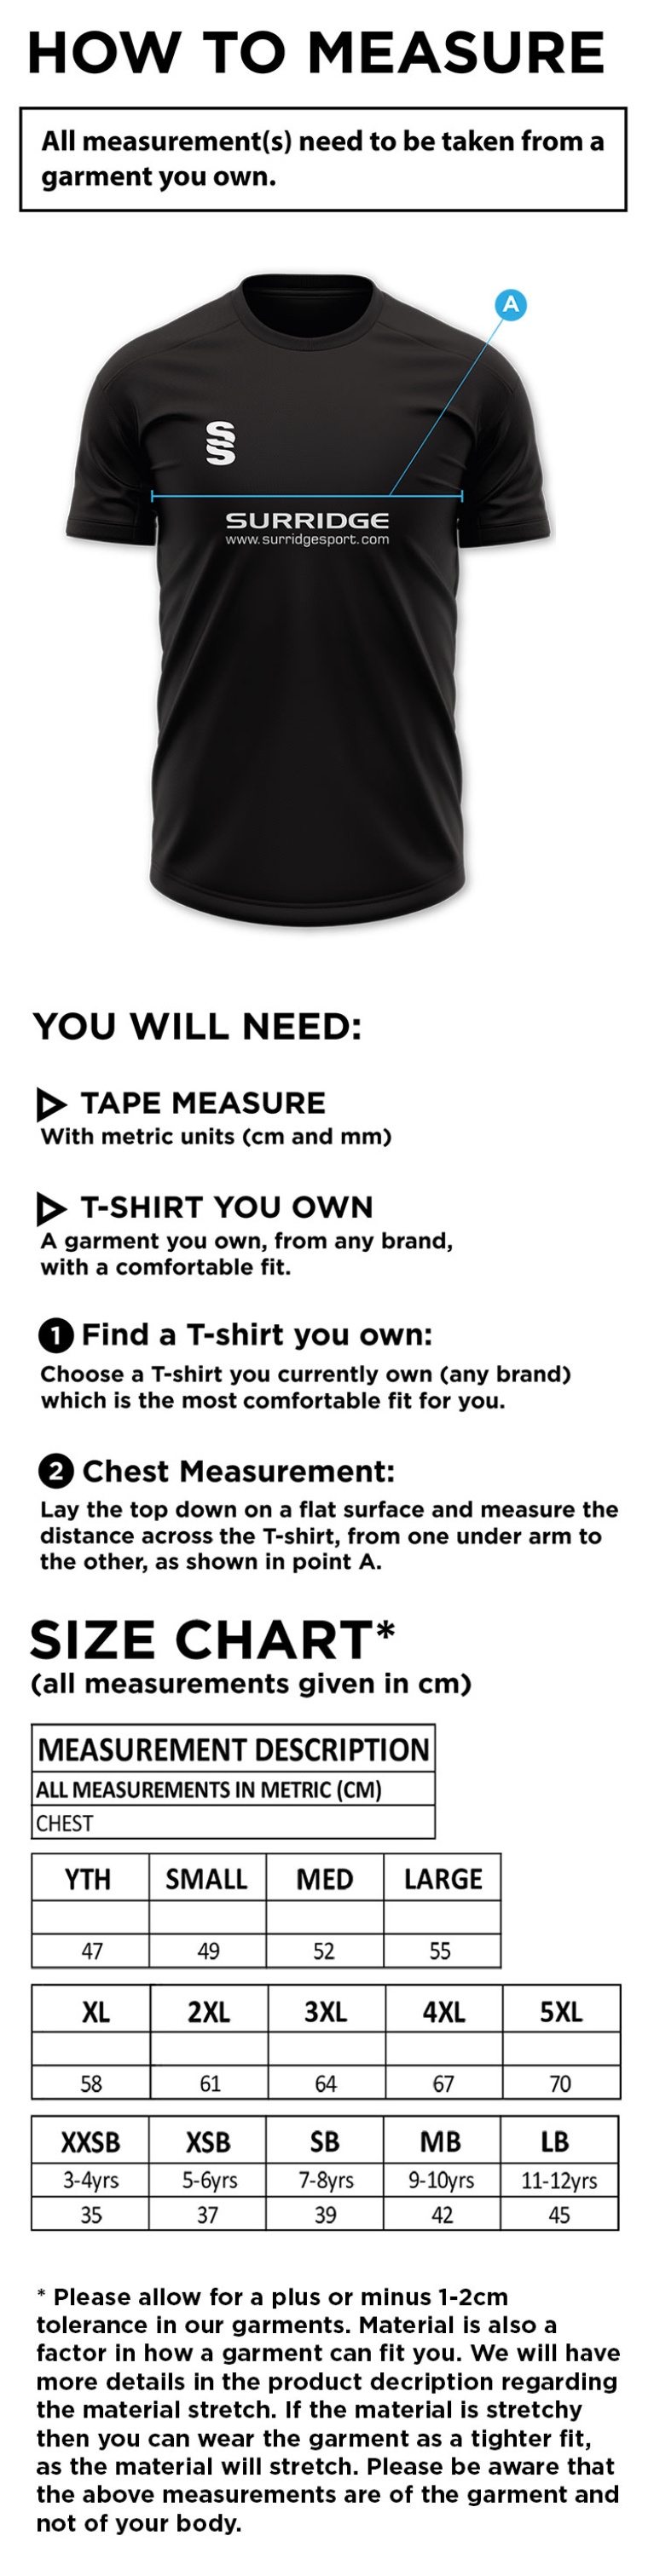 Blade Polo Shirt : Navy / Royal / White - Size Guide